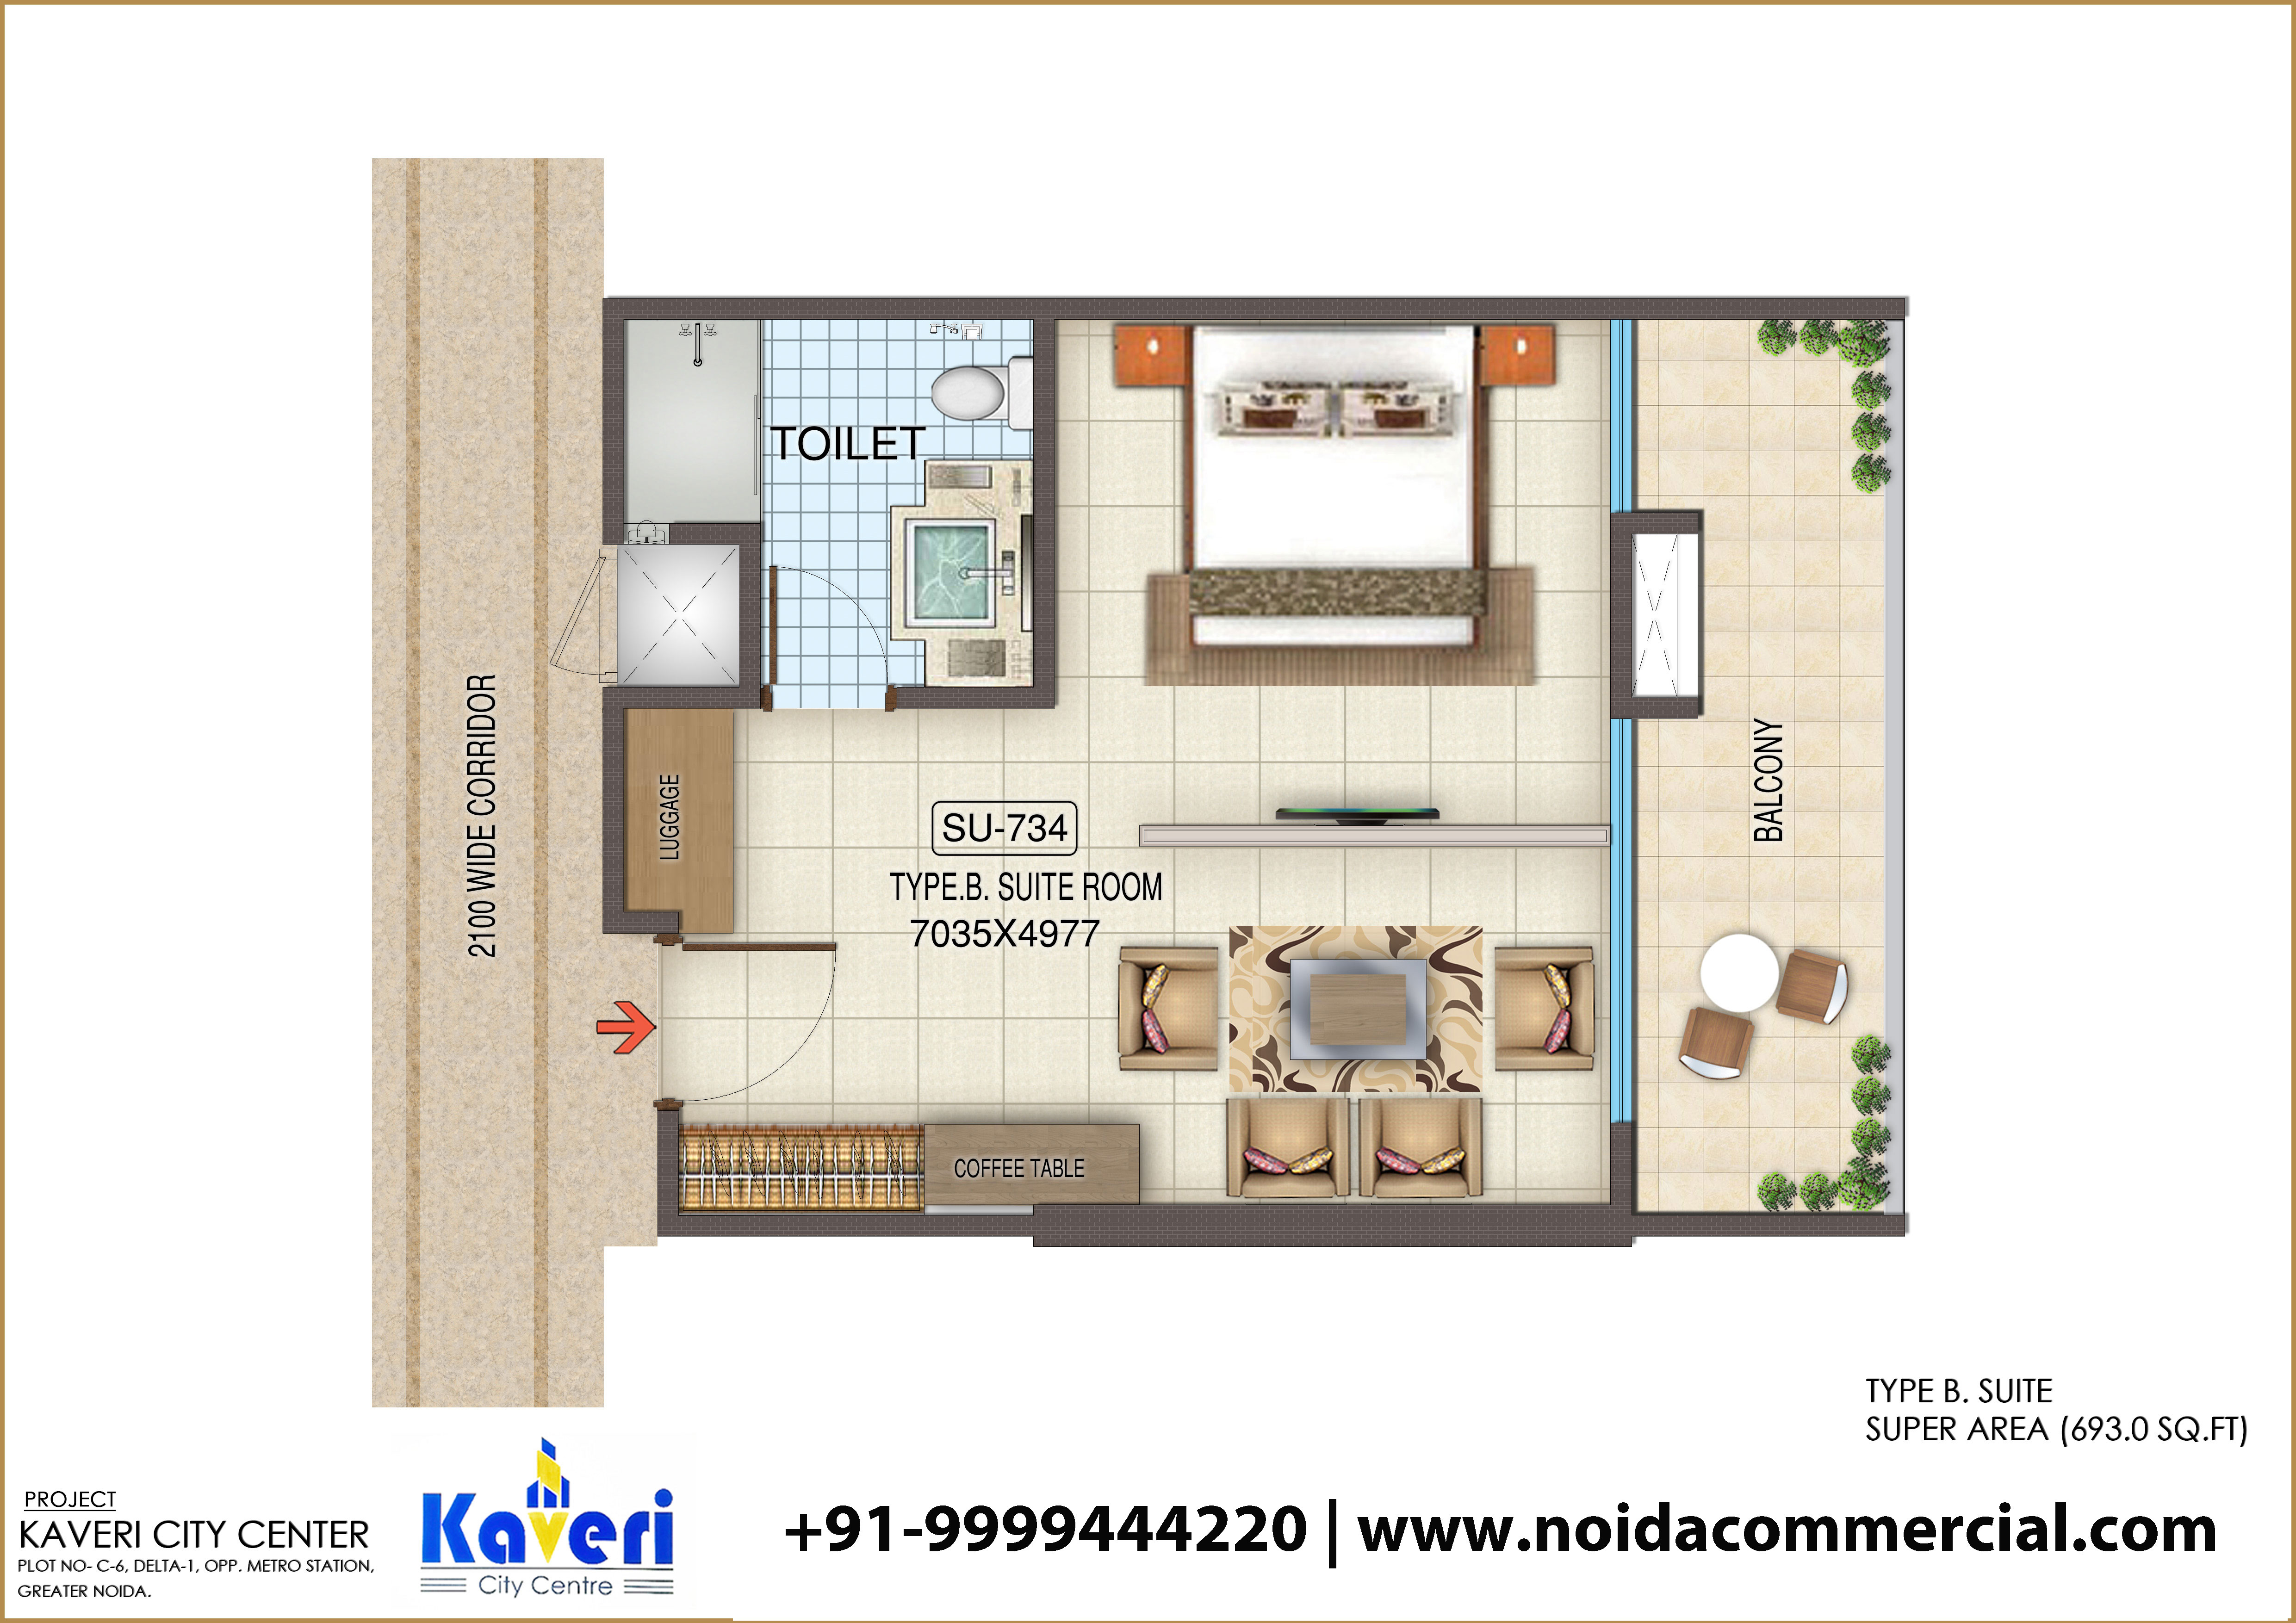 city centre kaveri floor plan studio apartmen